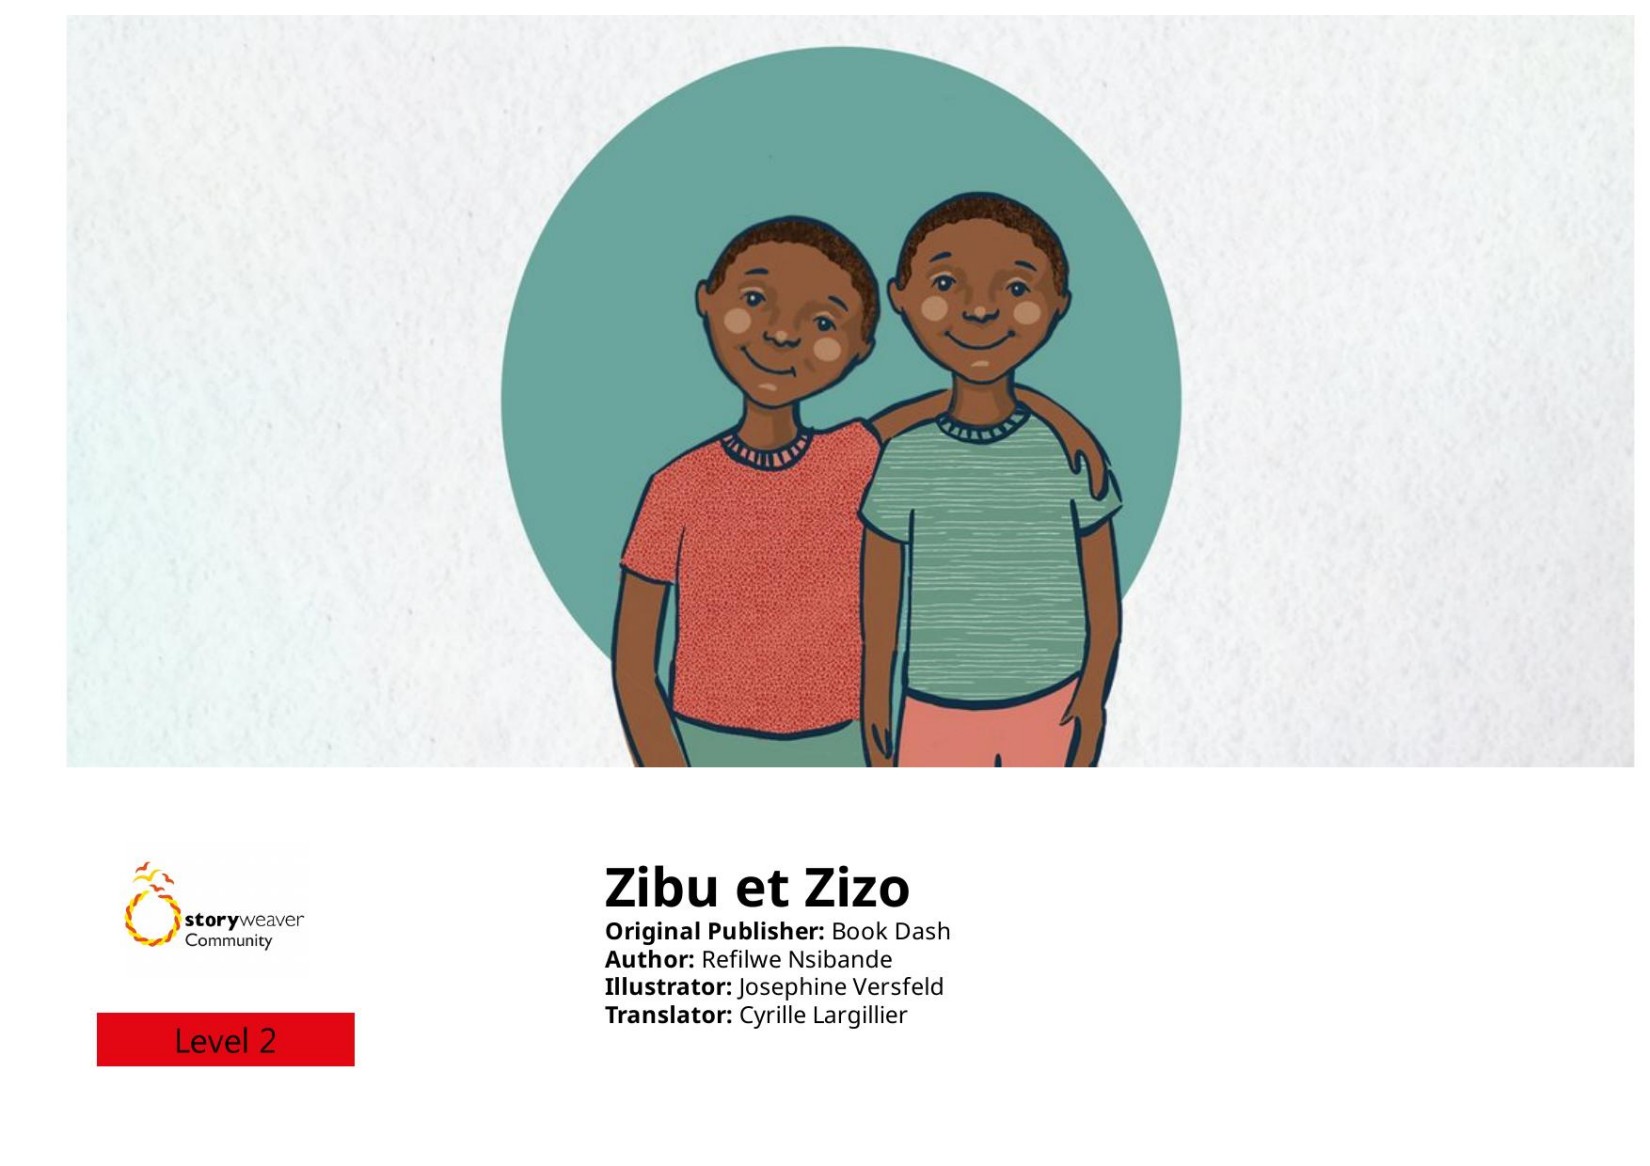 Zibu et Zizo